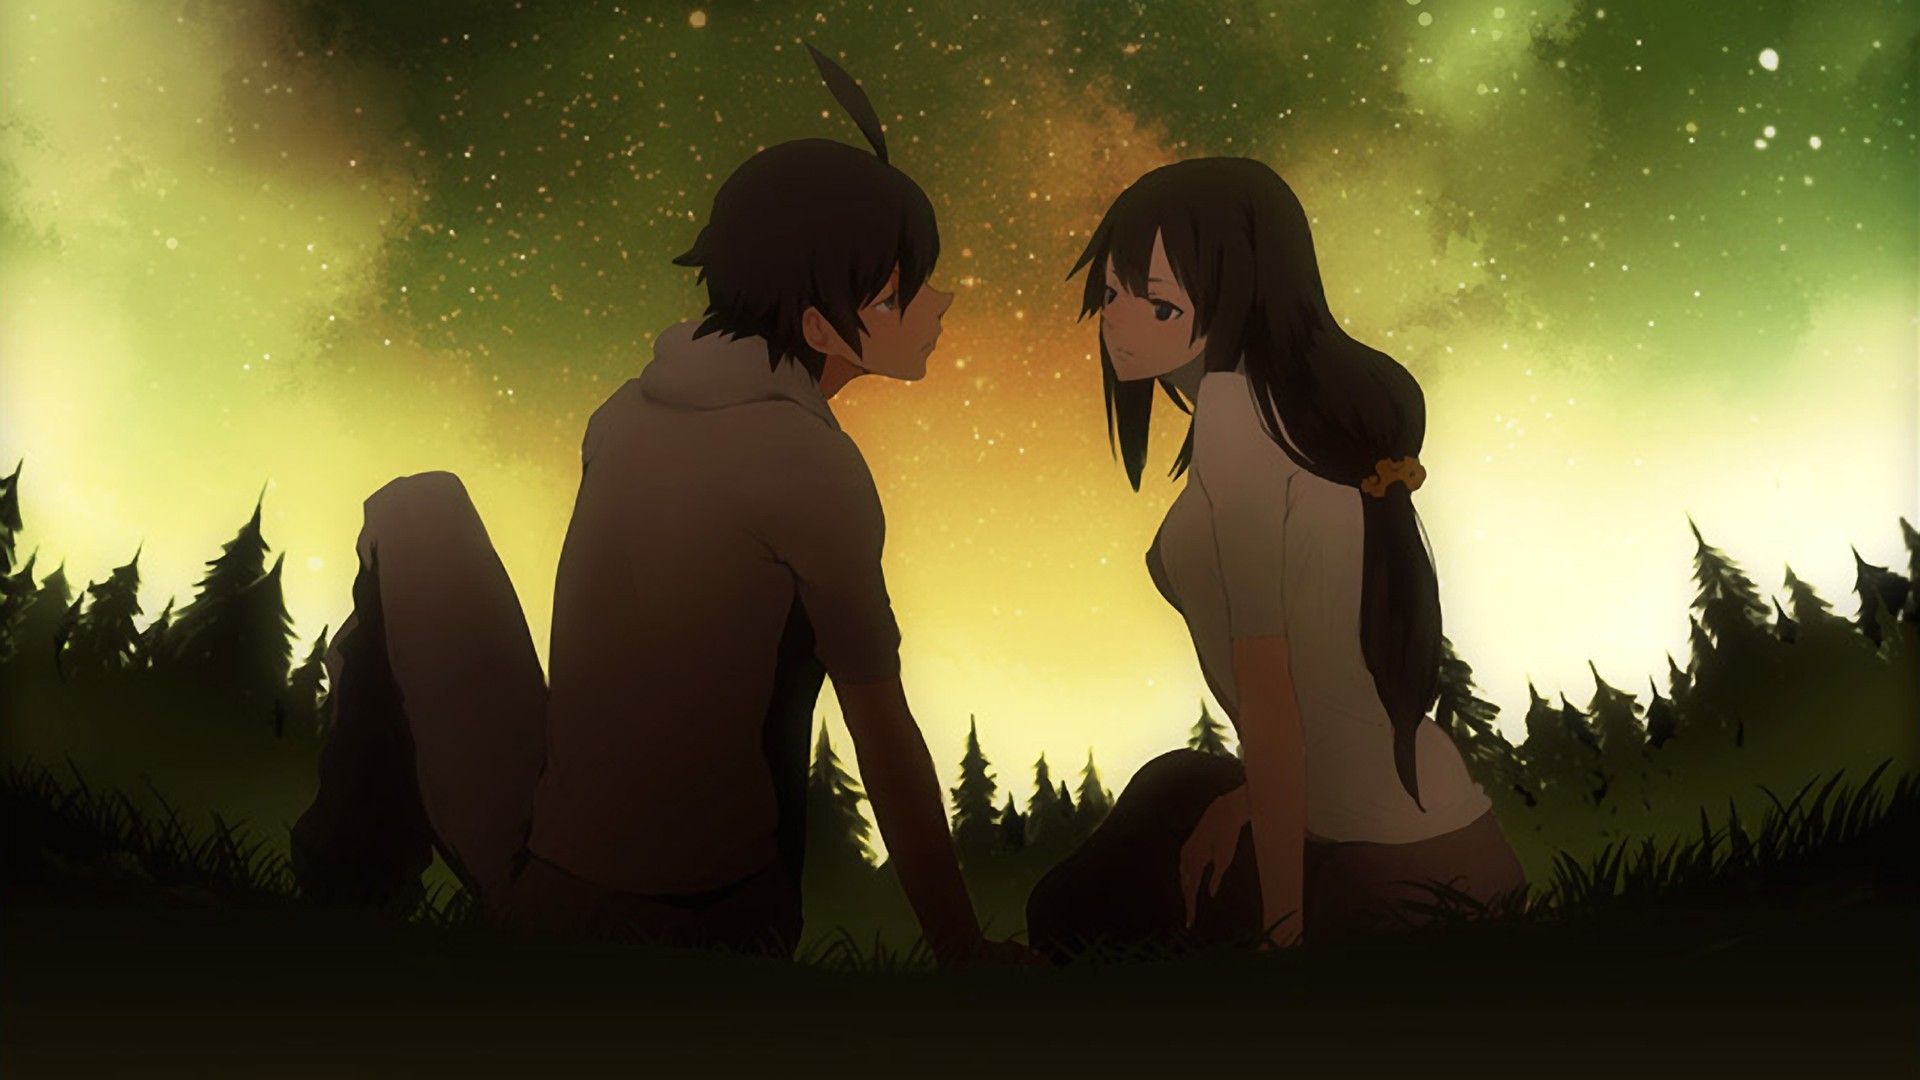 Cute Anime Couple HD Wallpaper Couple Image Download